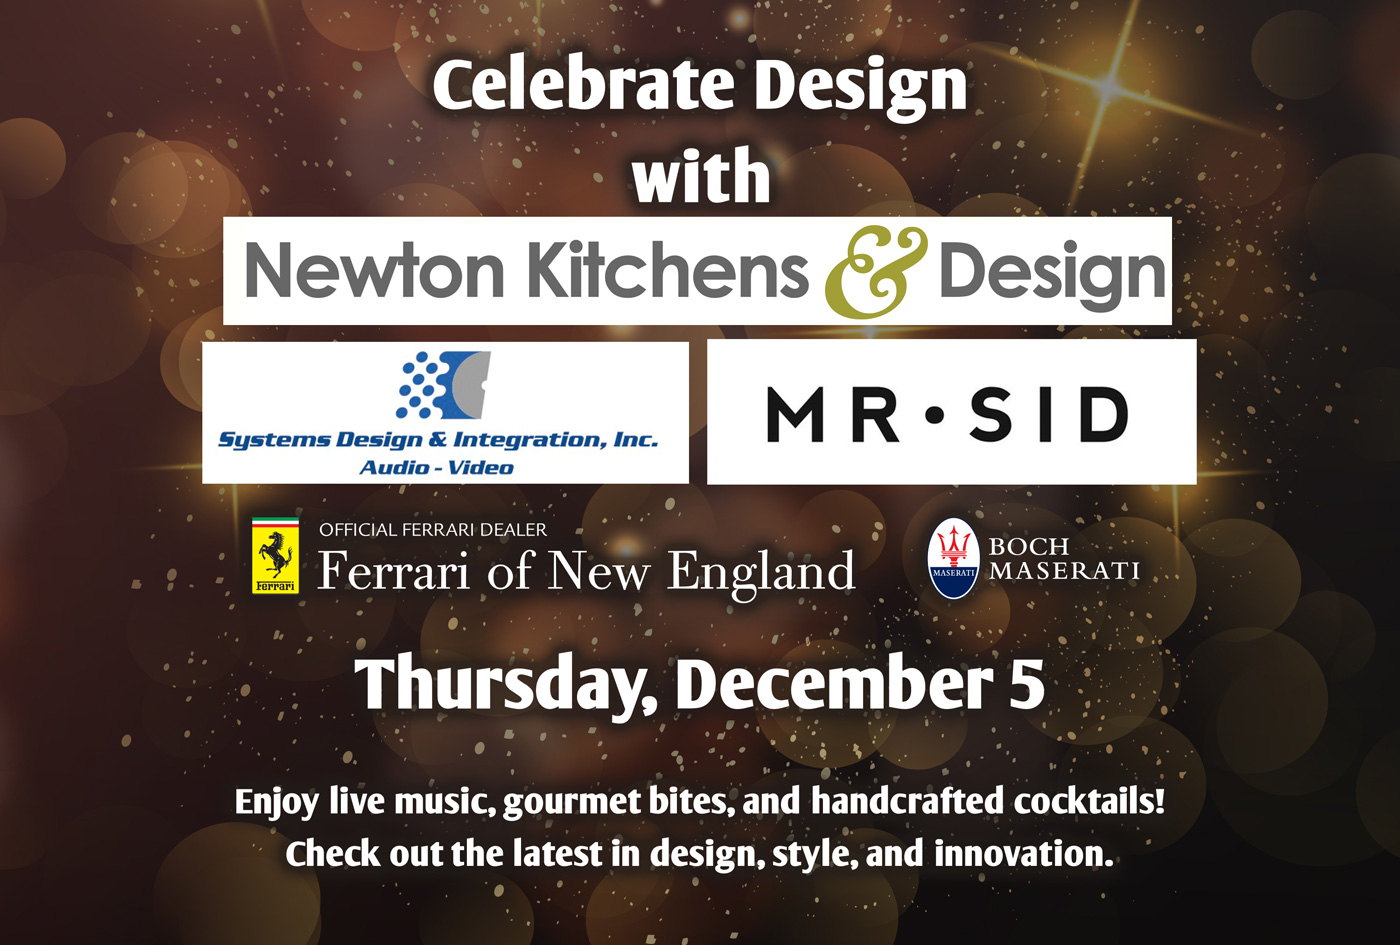 "The Best in Design" Celebration Dec. 5 at Newton Kitchens & Design